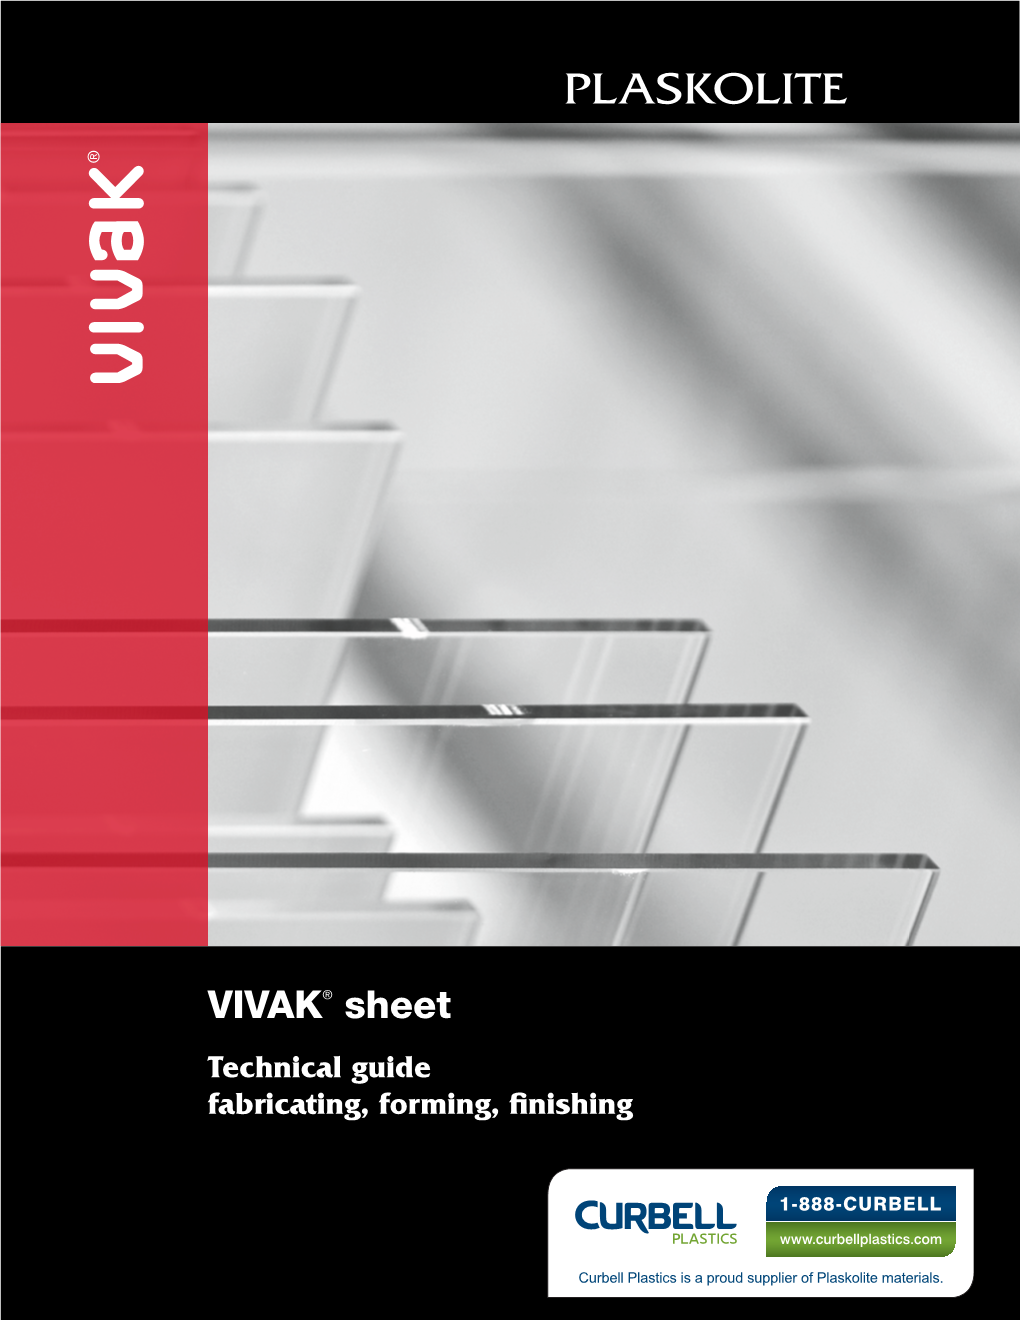 VIVAK® PETG Sheet Fabrication Guide (At Curbell Plastics)